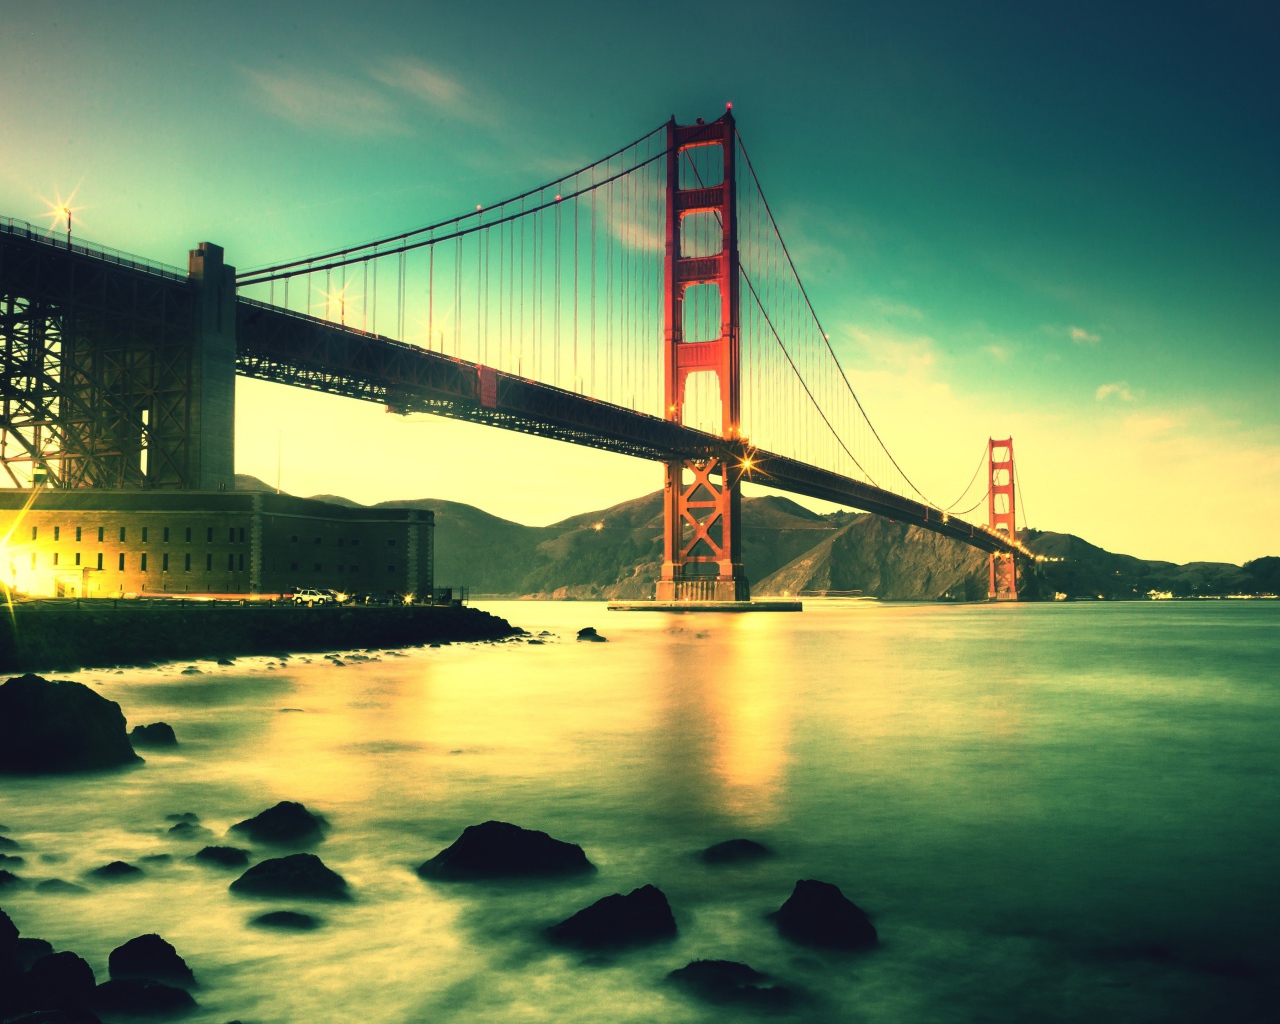 Evening Golden Gate Bridge in San Francisco 